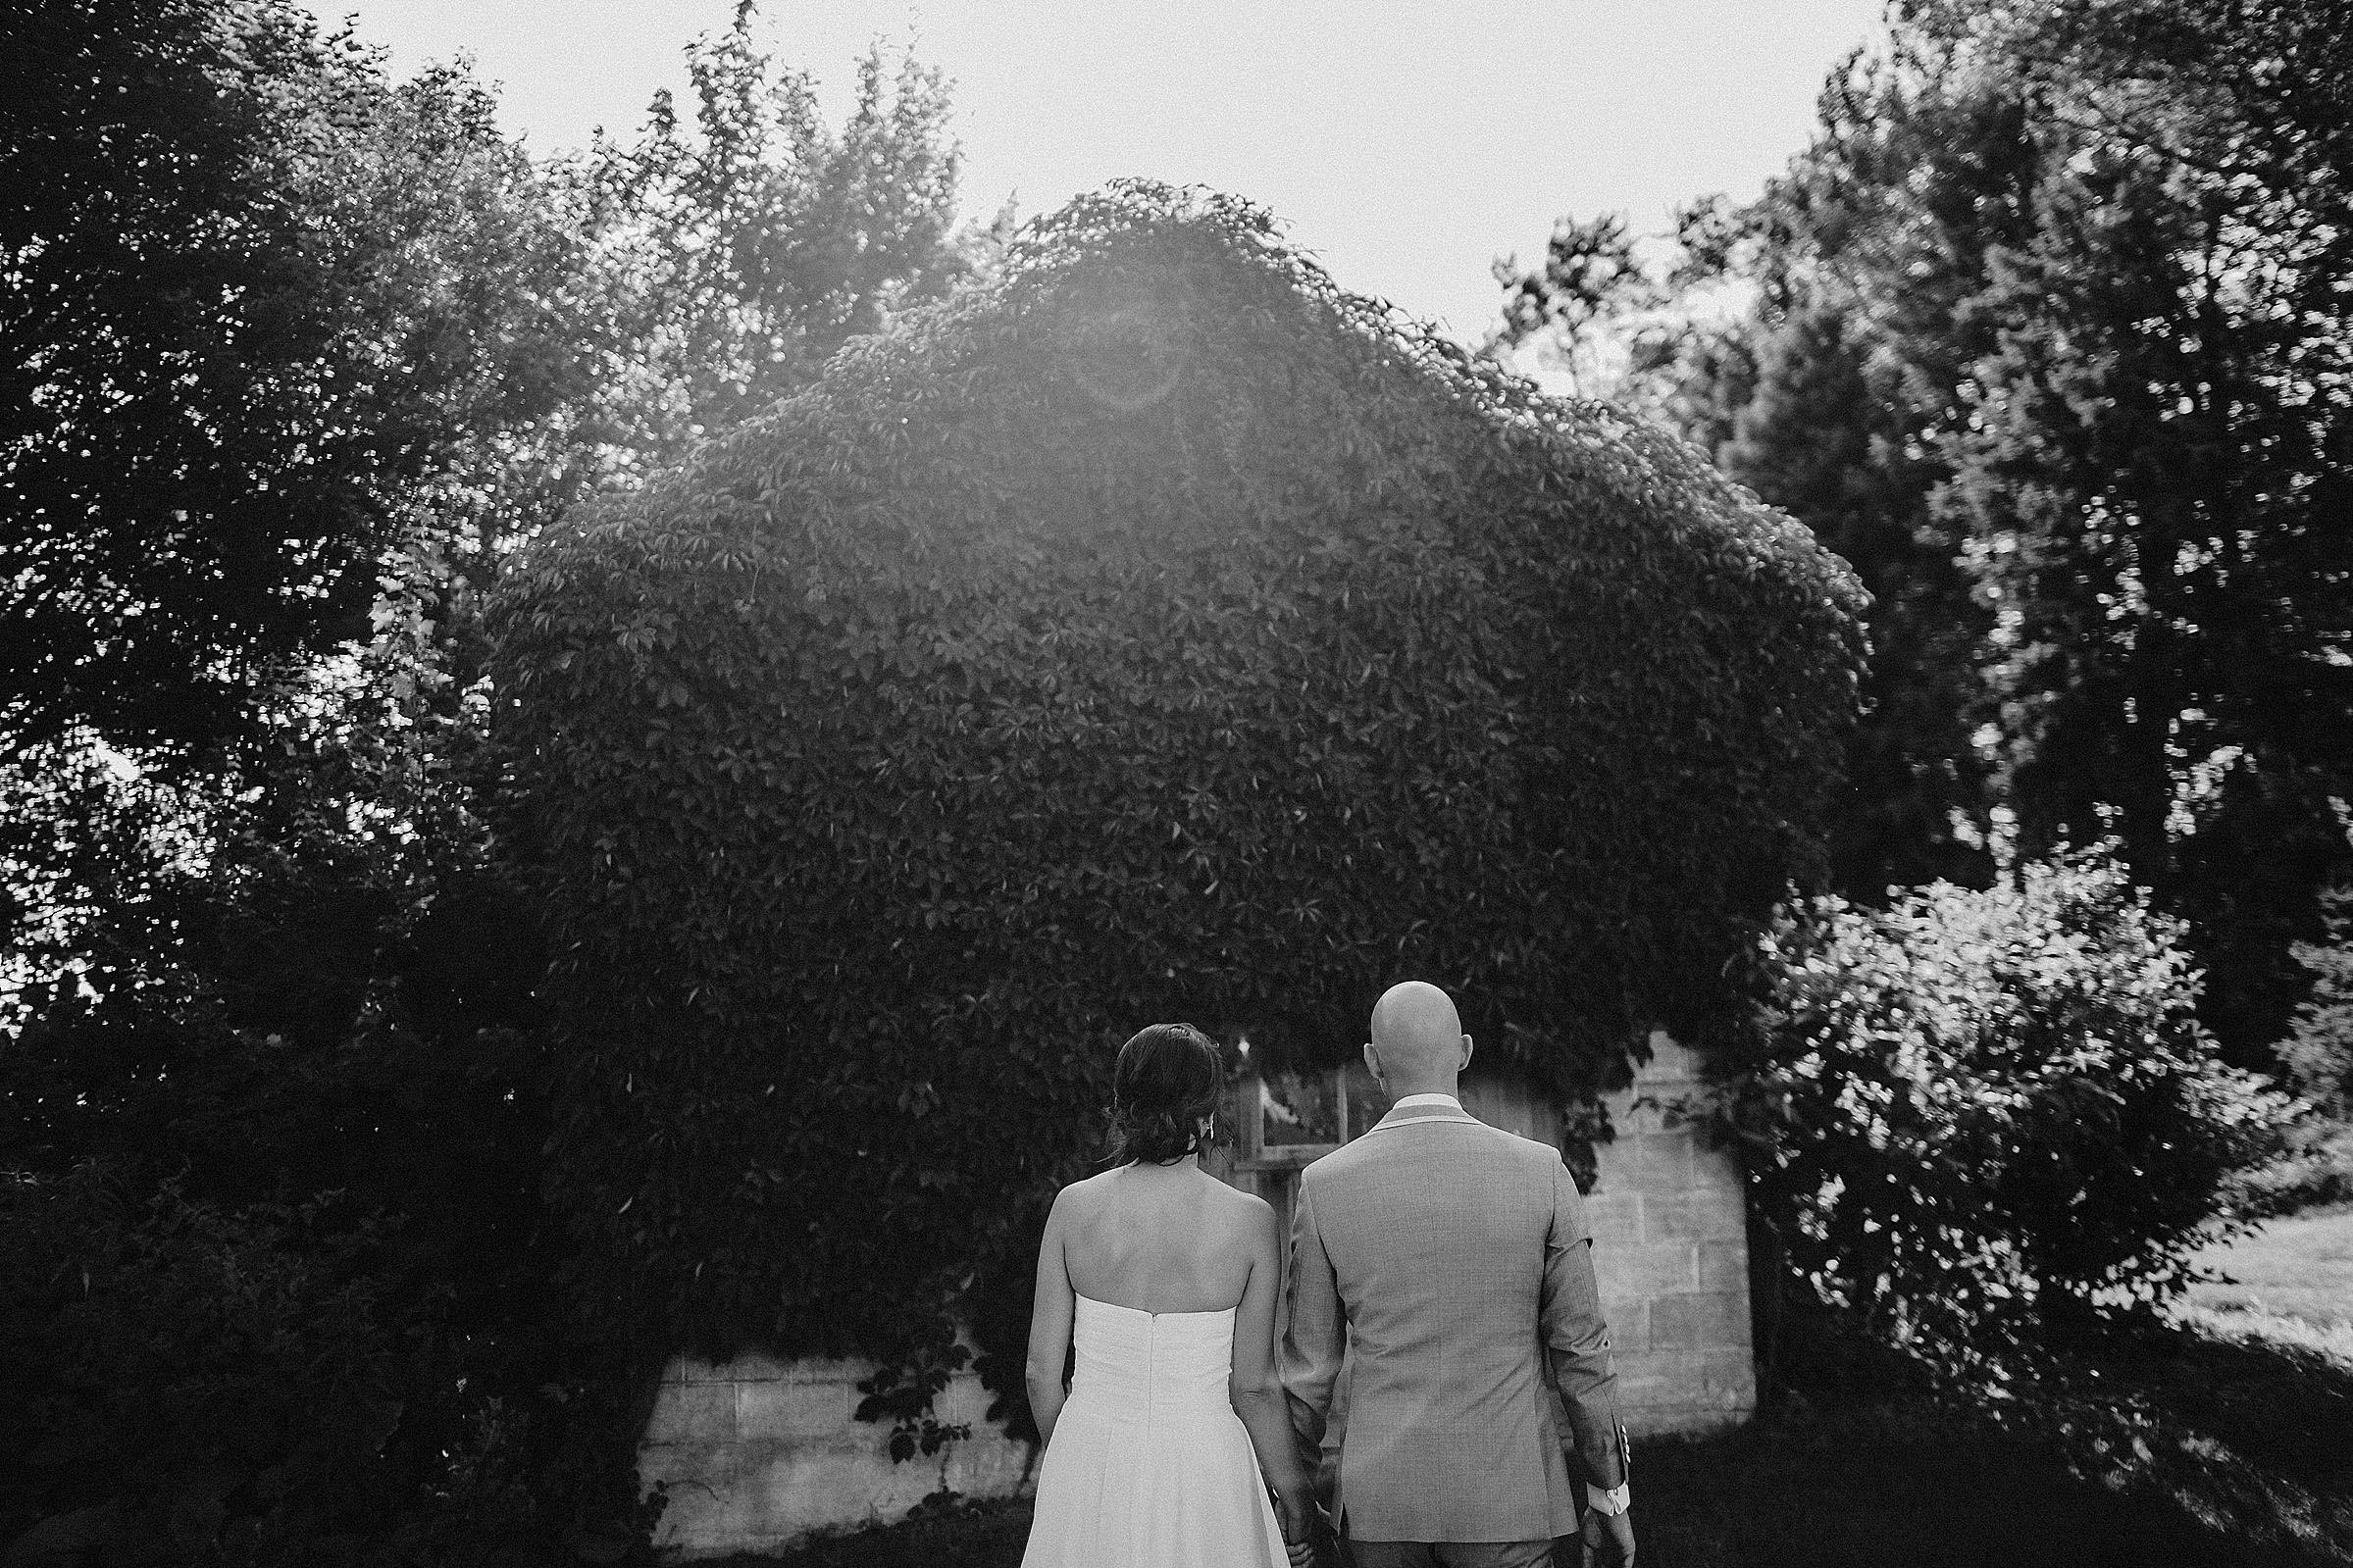 South bend notre dame wedding photographer151.jpg